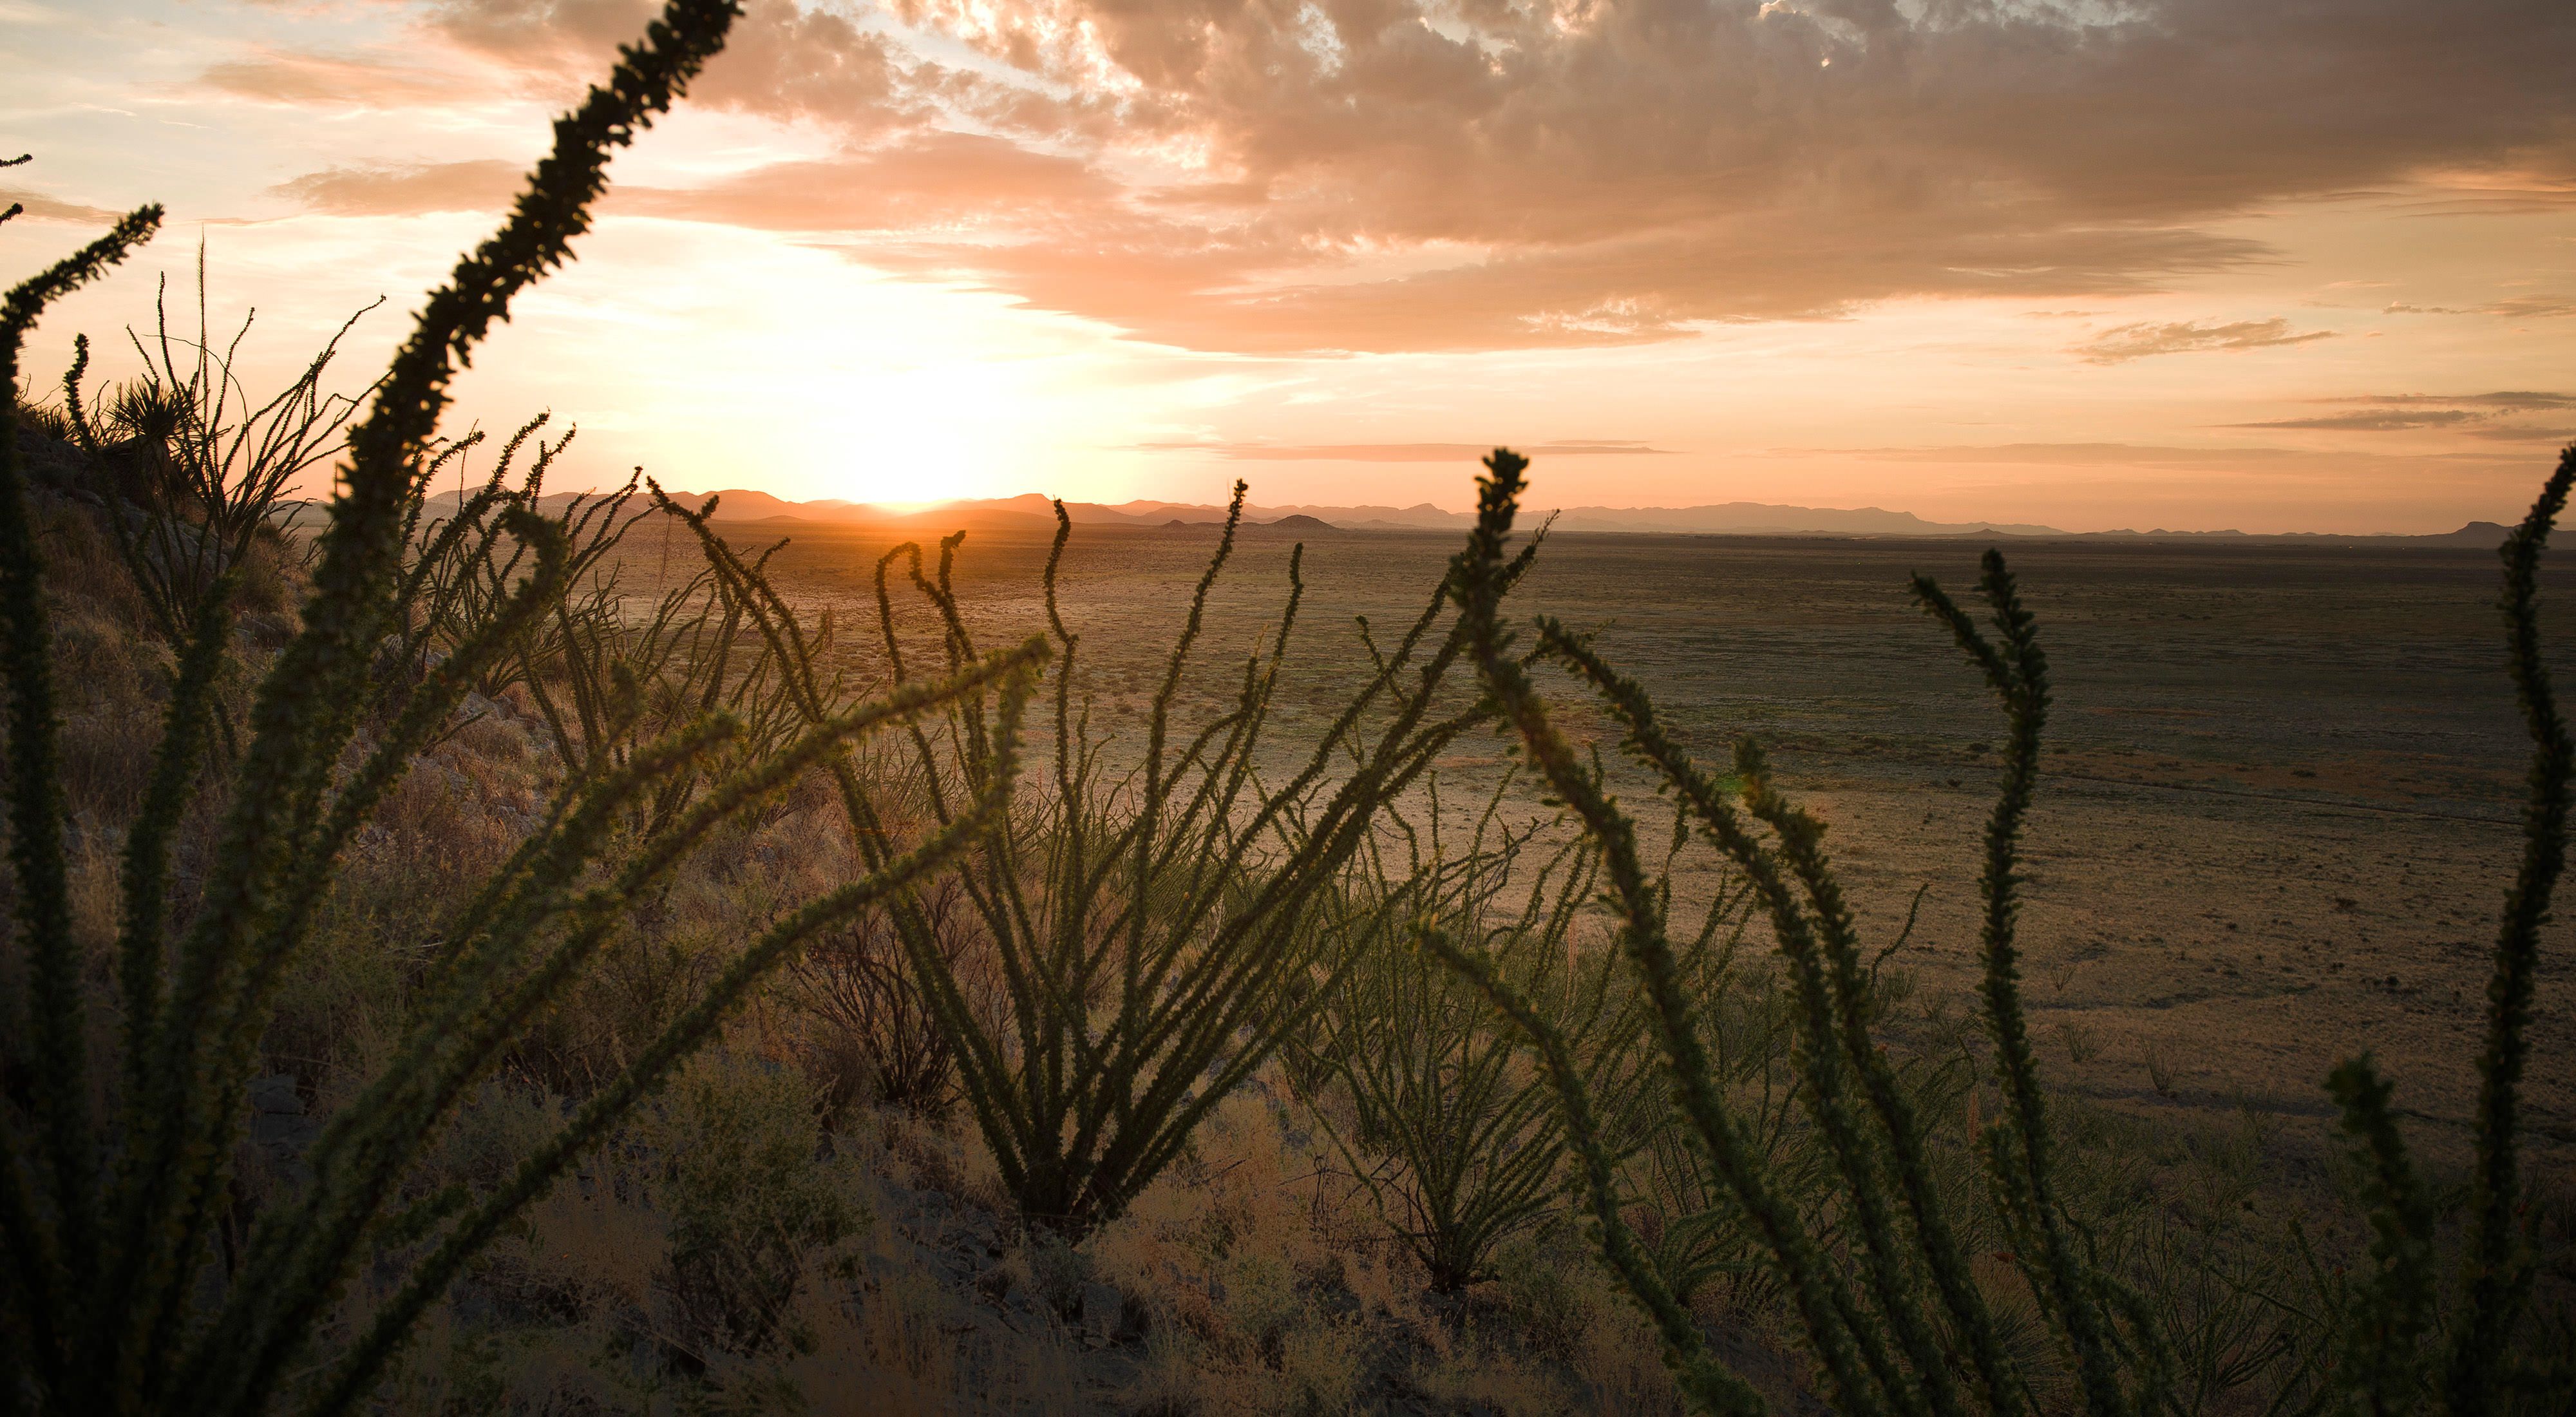 The setting sun drops below the horizon of a desert lan